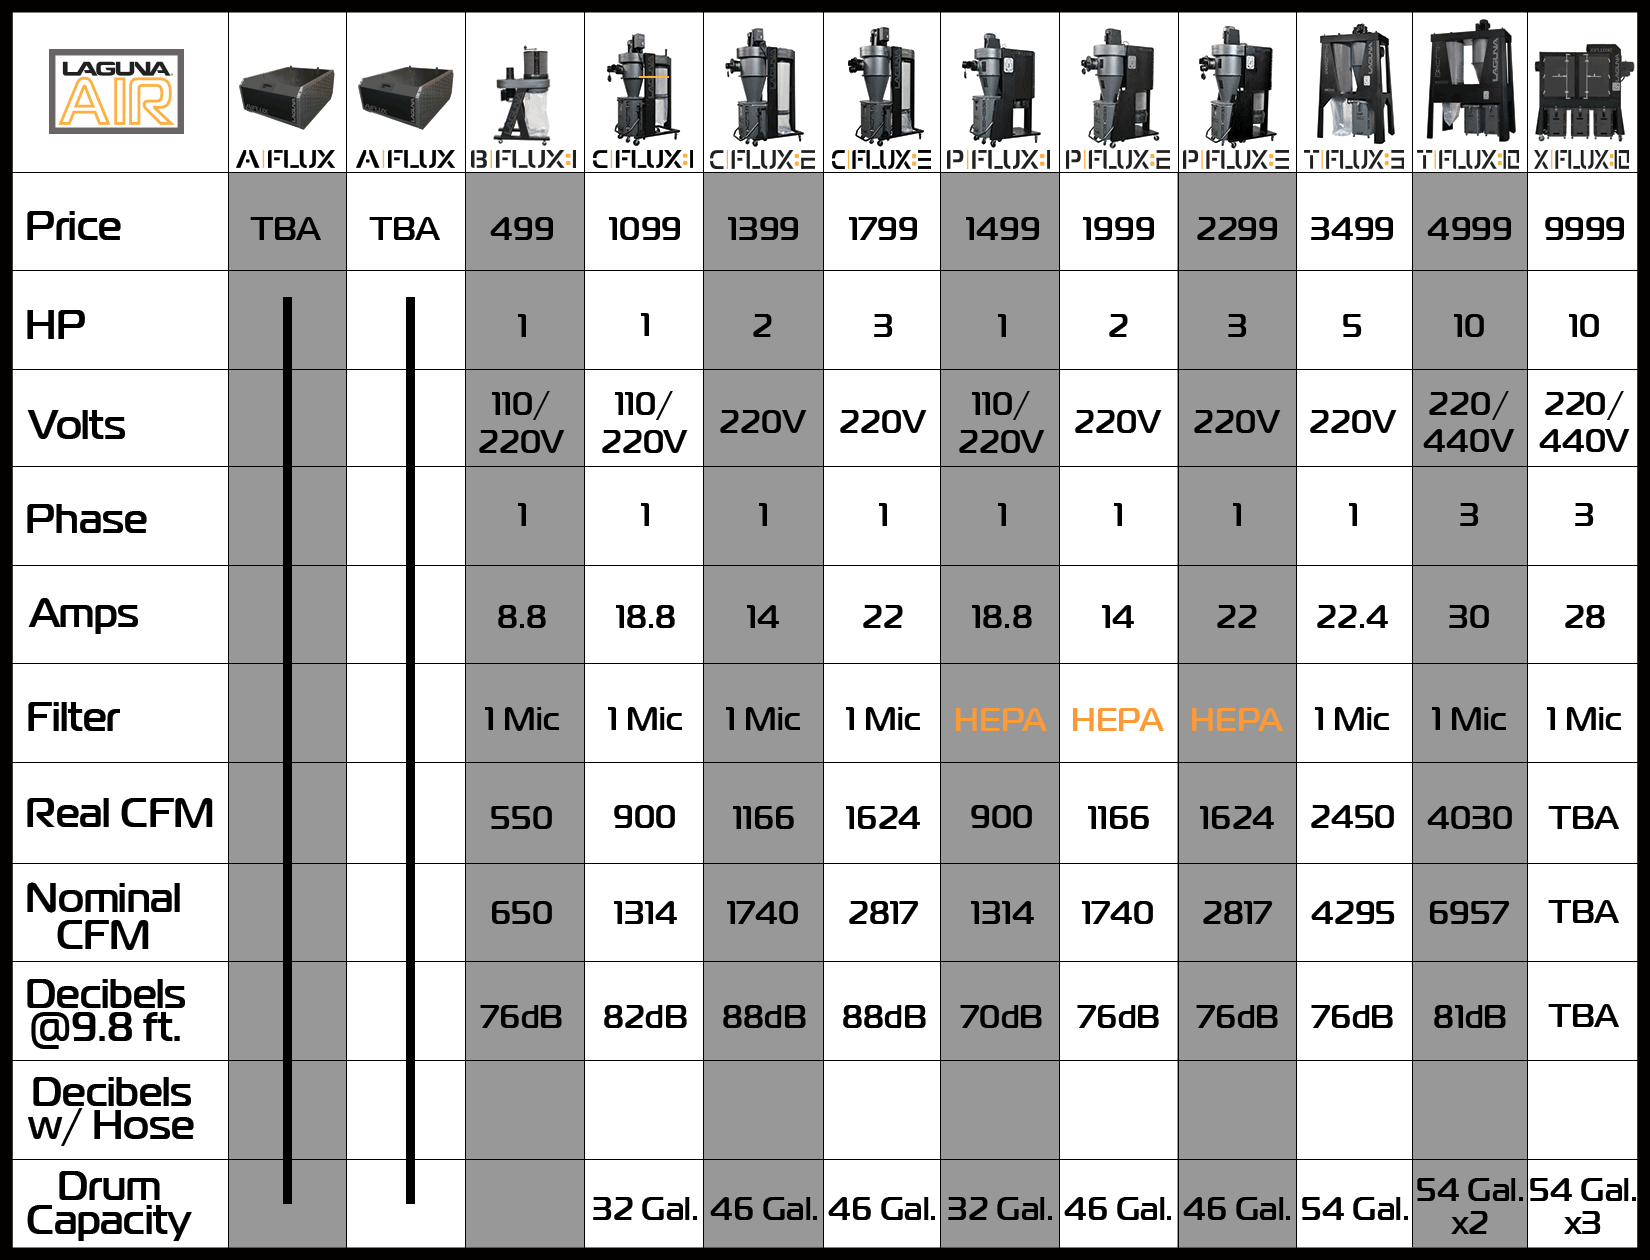 Laguna Size Chart